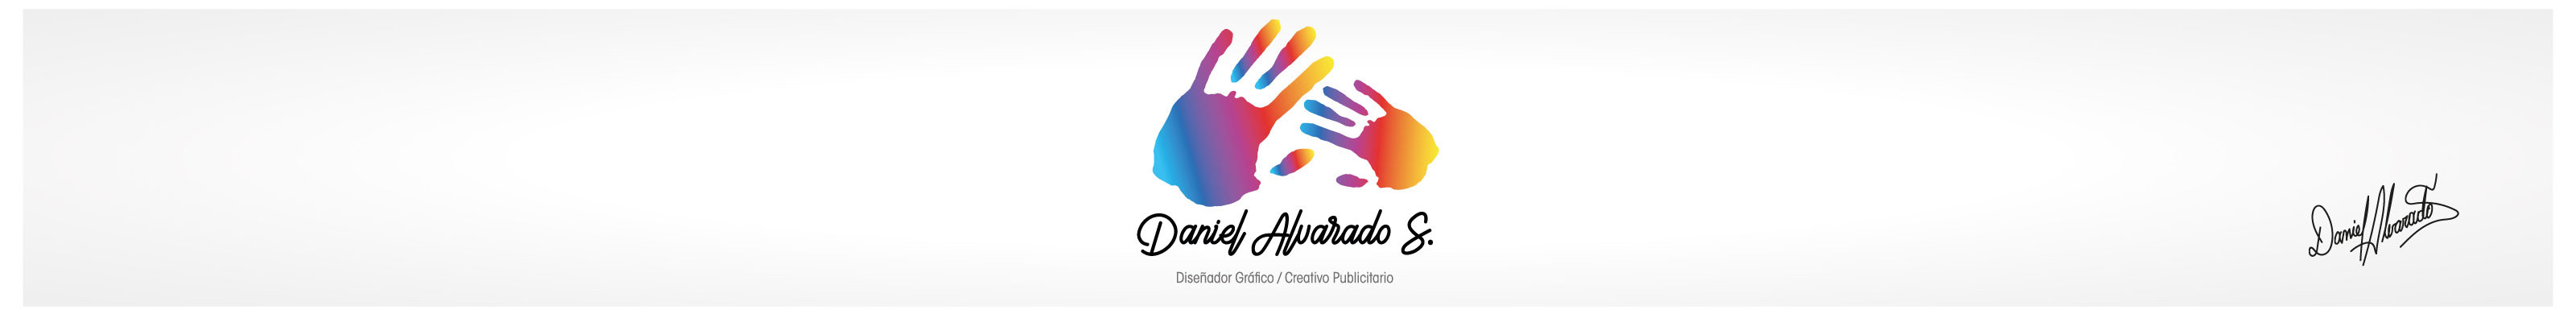 daniel alvarado's profile banner